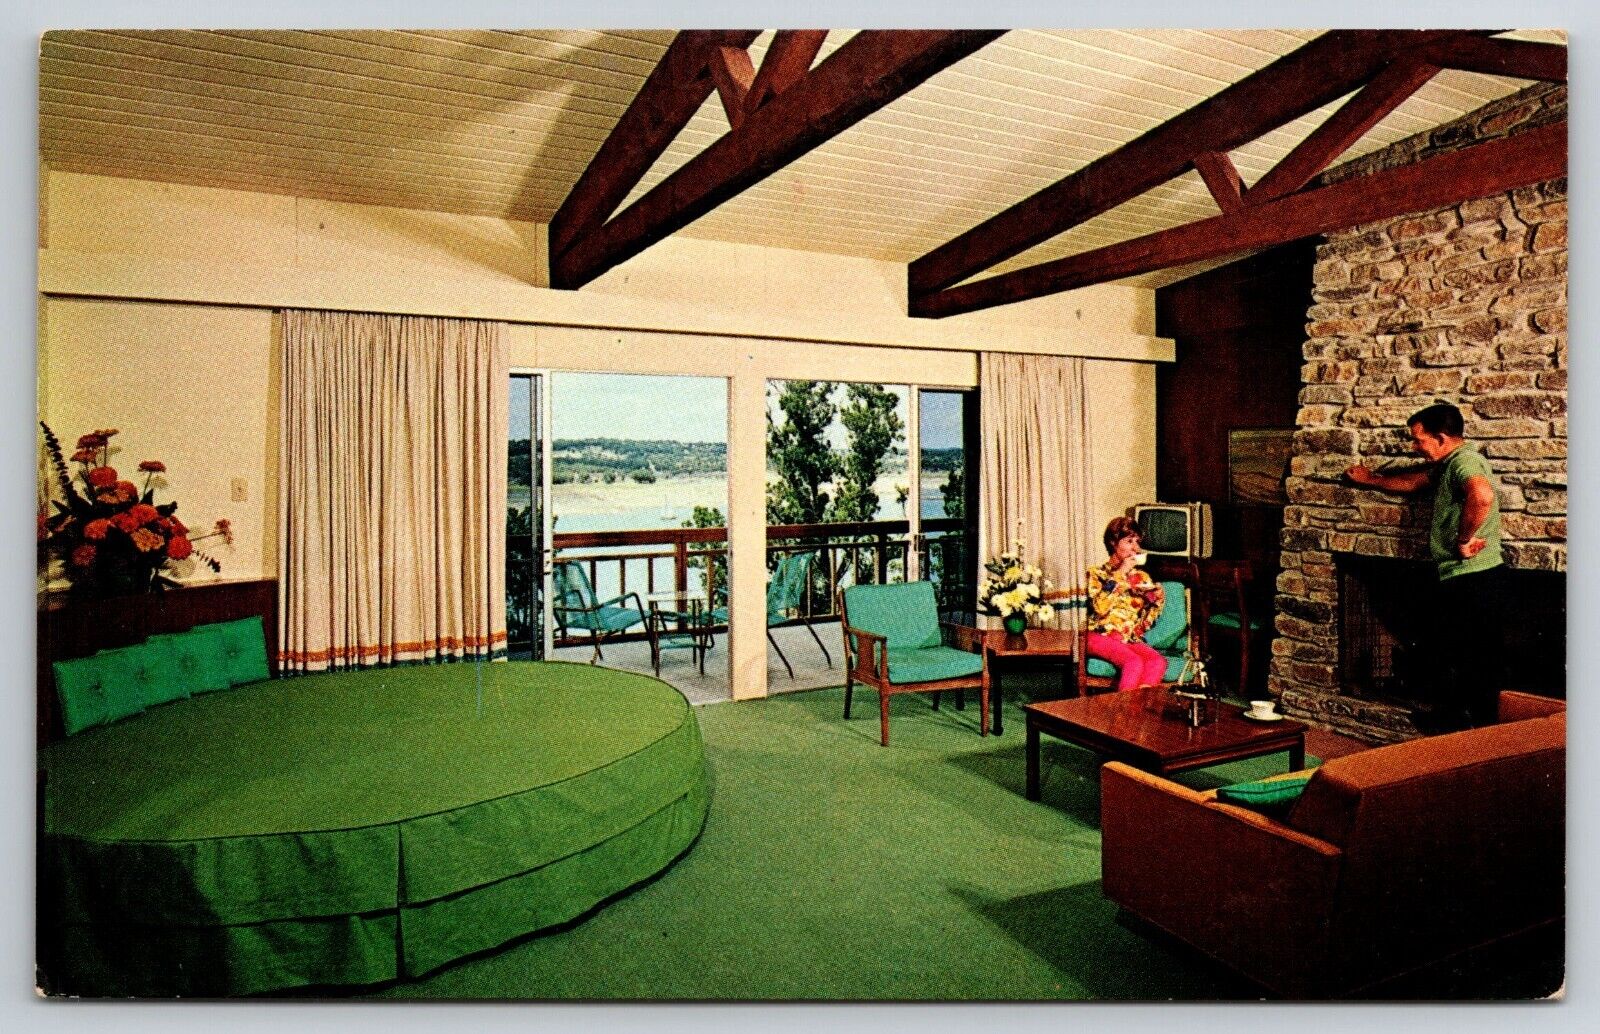 Lakeway Inn & Marina, Lake Travis,  Austin, Texas Postcard S4290